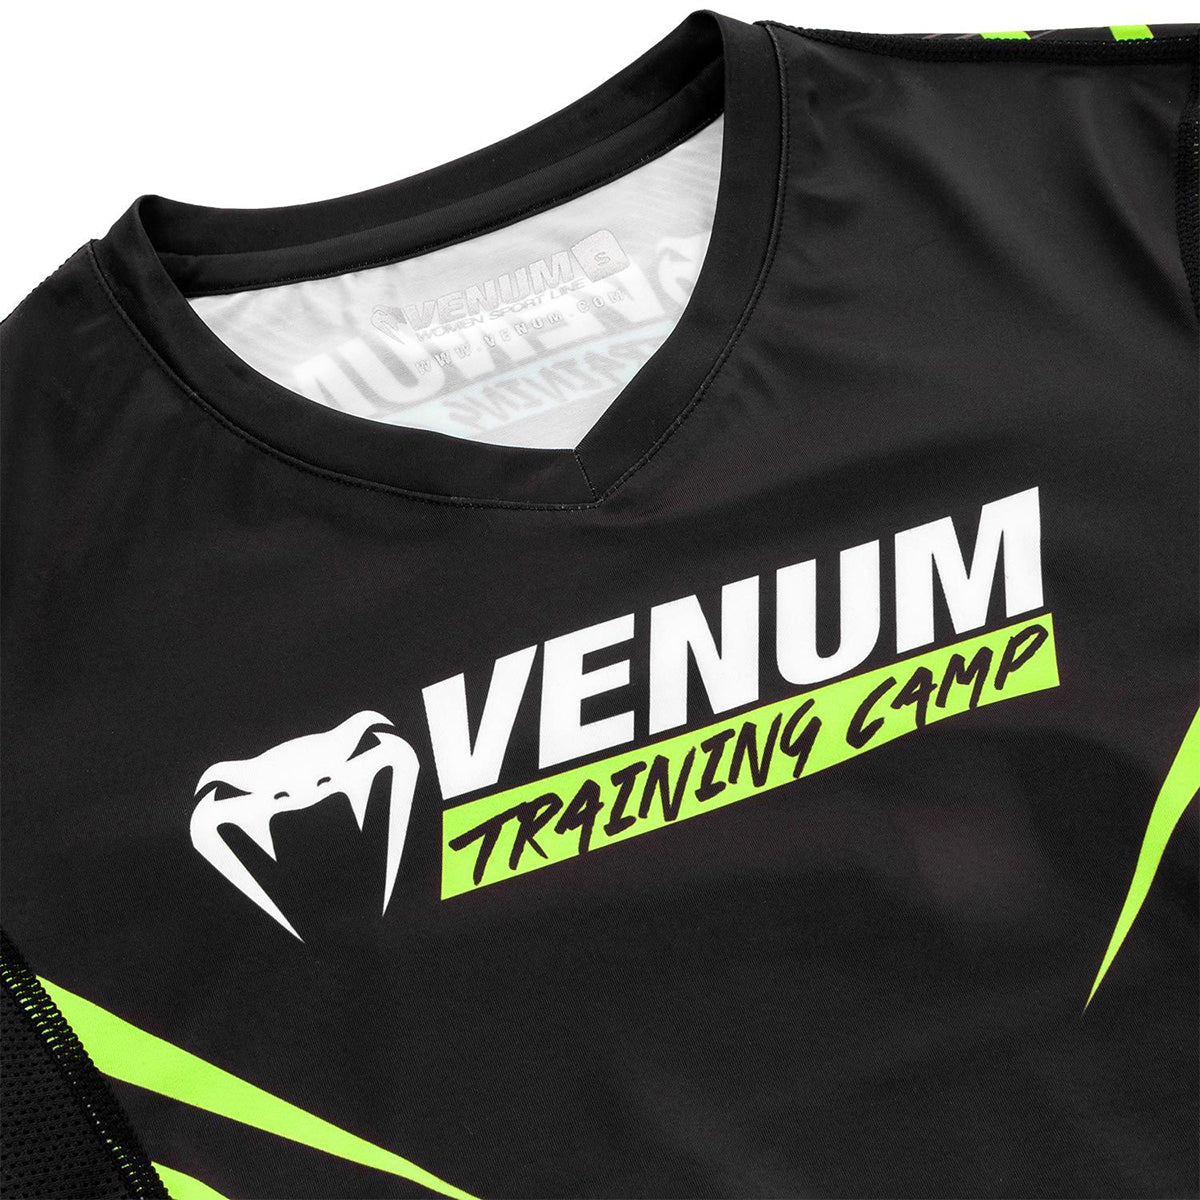 Venum Women's Training Camp 2.0 Long Sleeve Rashguard - Black/Neon Yellow Venum